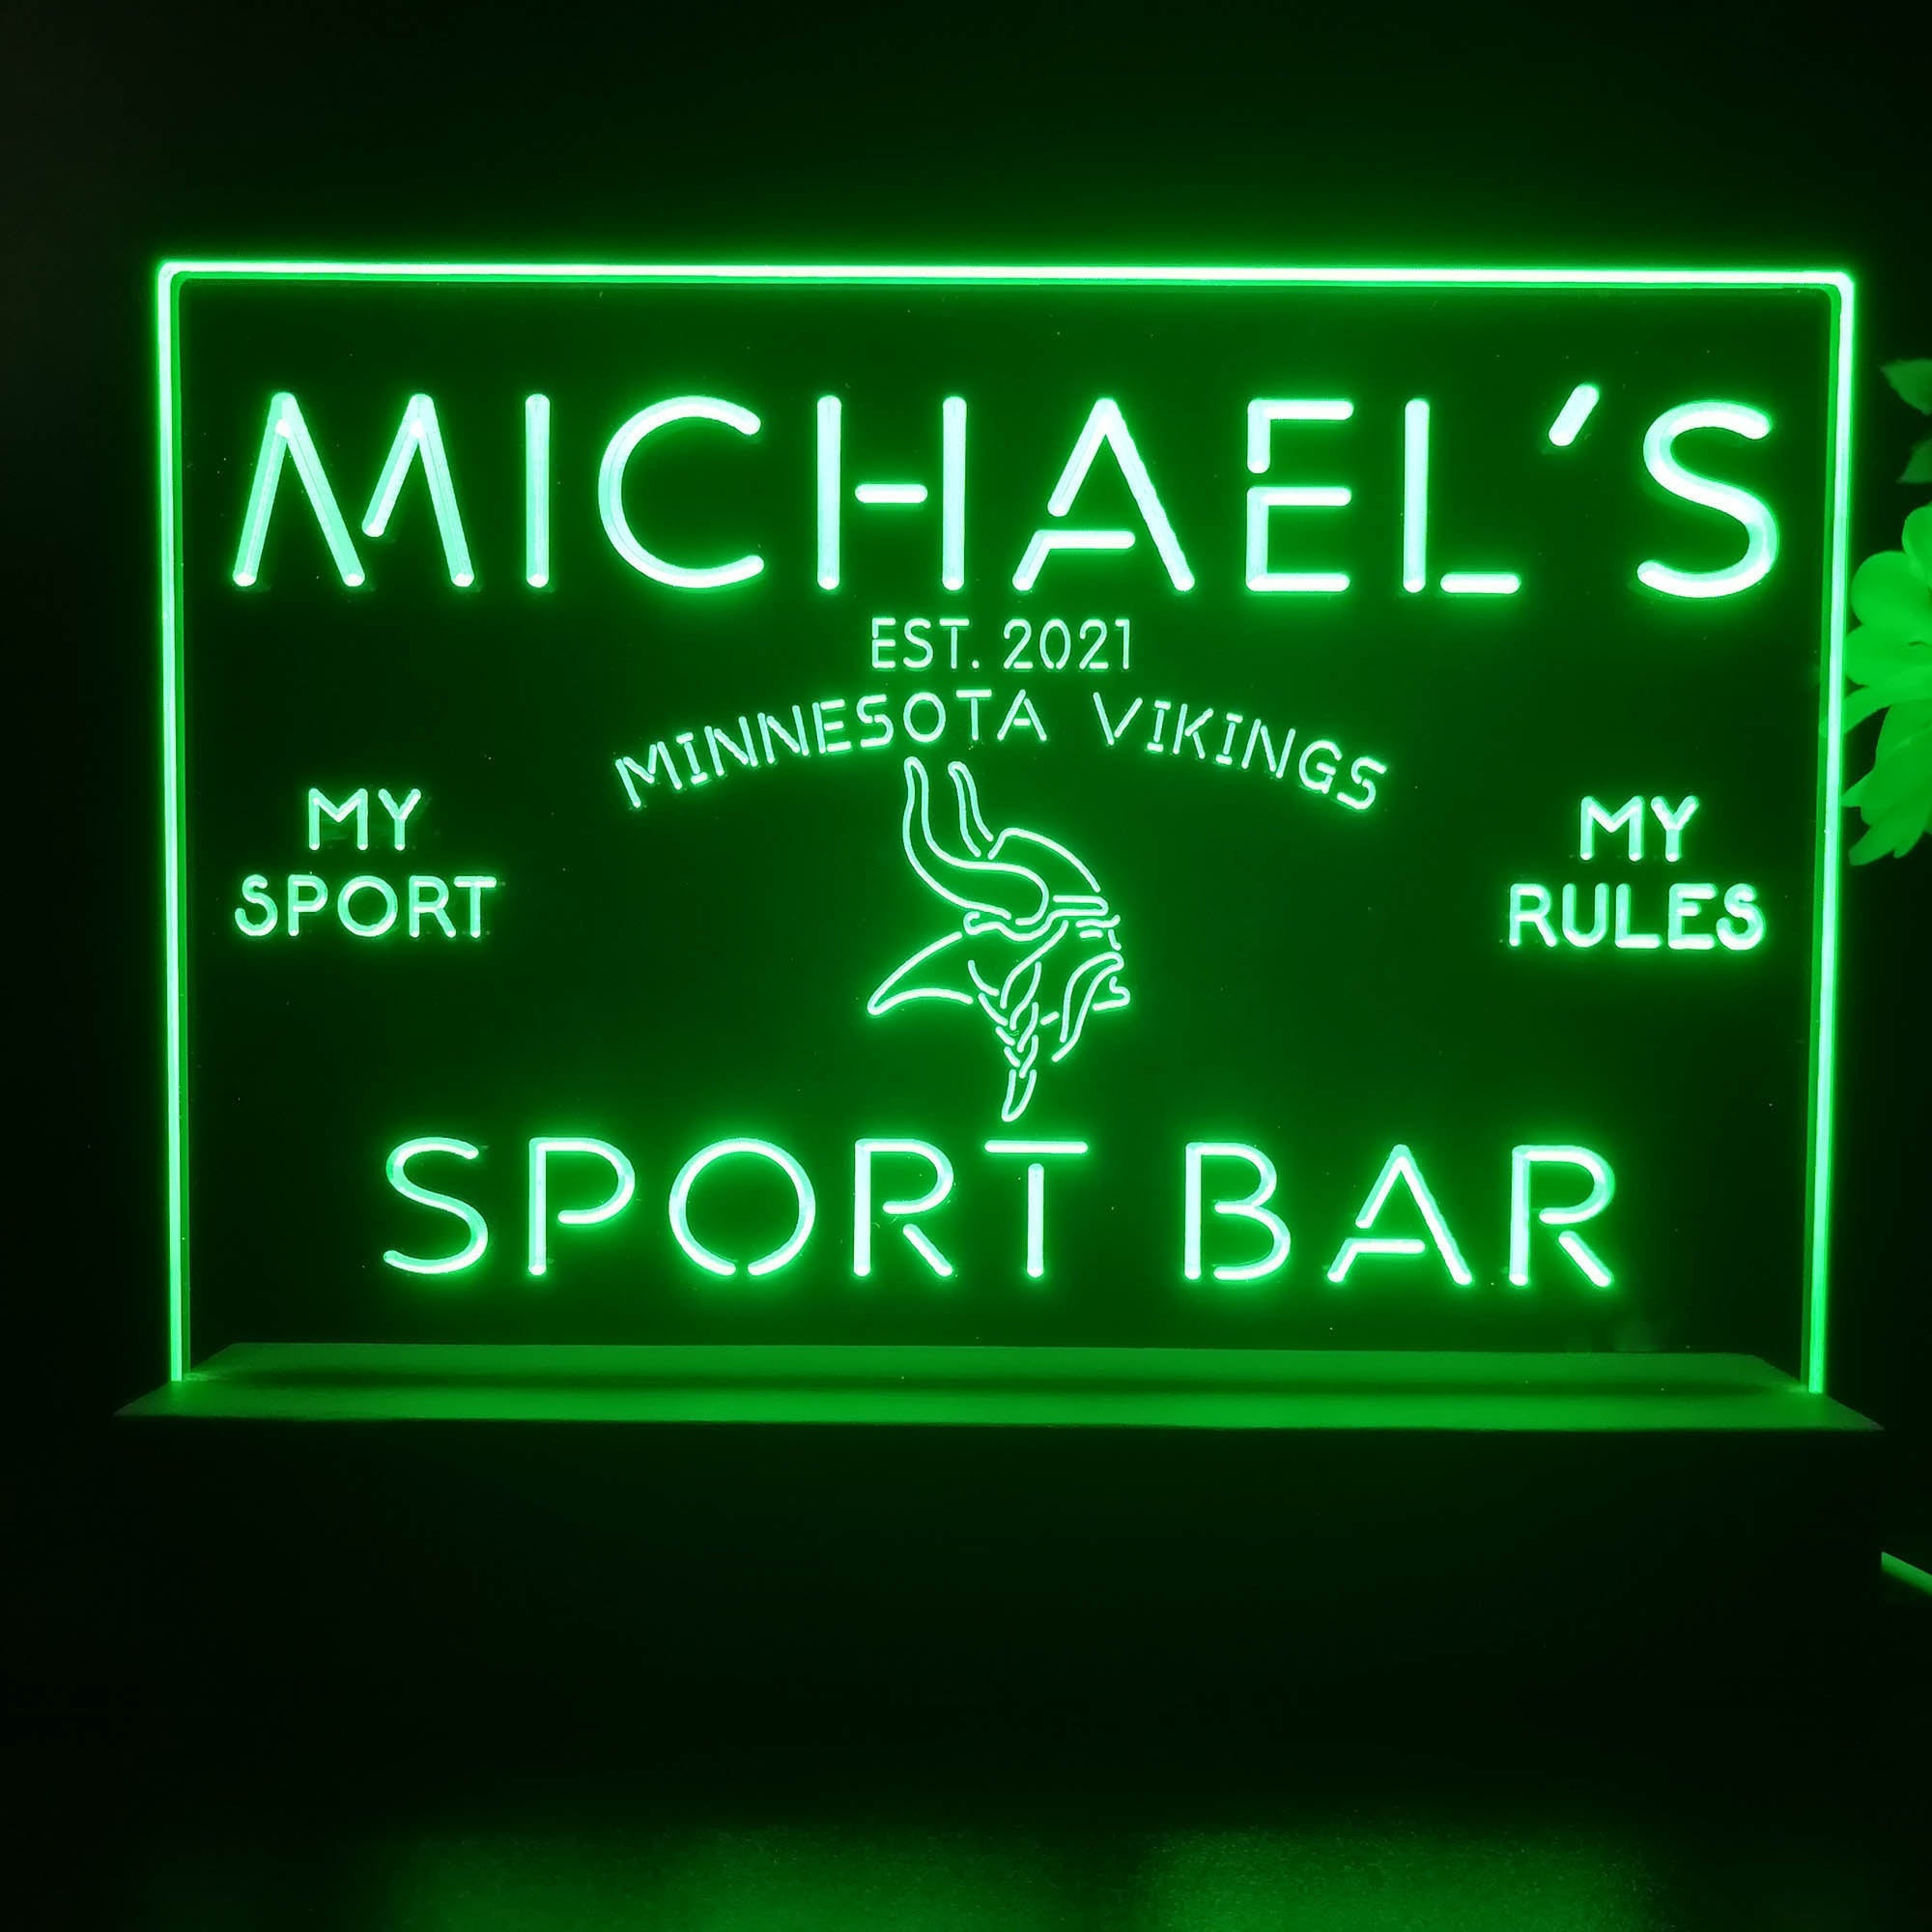 Personalized Minnesotas Viking Souvenir Neon LED Night Light Sign